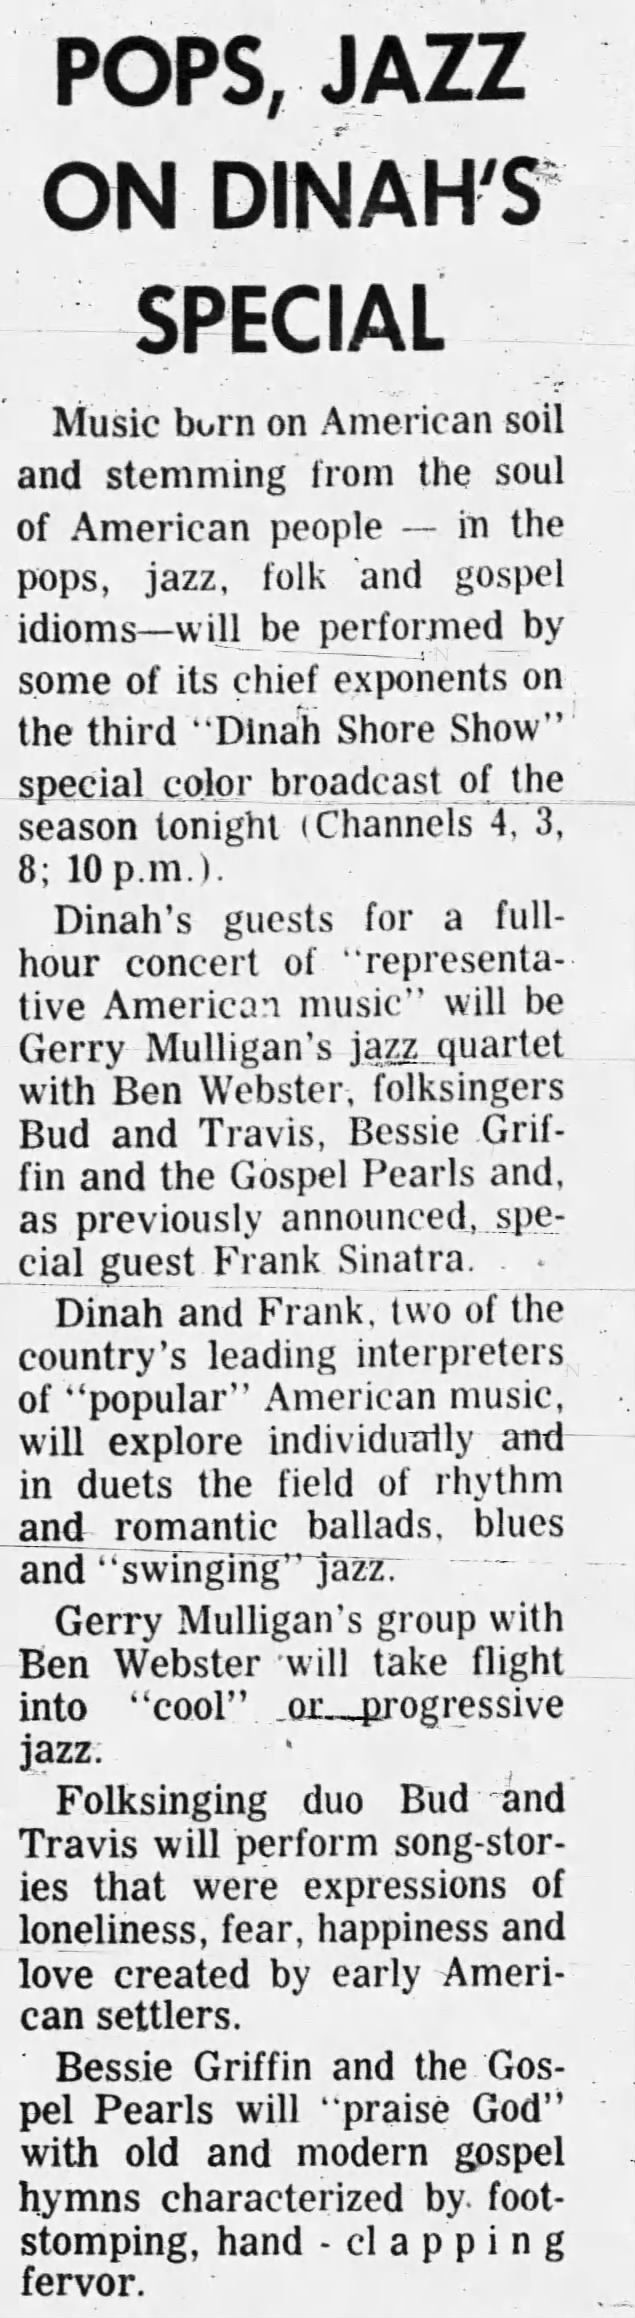 Pops, Jazz on Dinah's Special. December 9, 1962. Oakland, California: The Oakland Tribune. p. 10